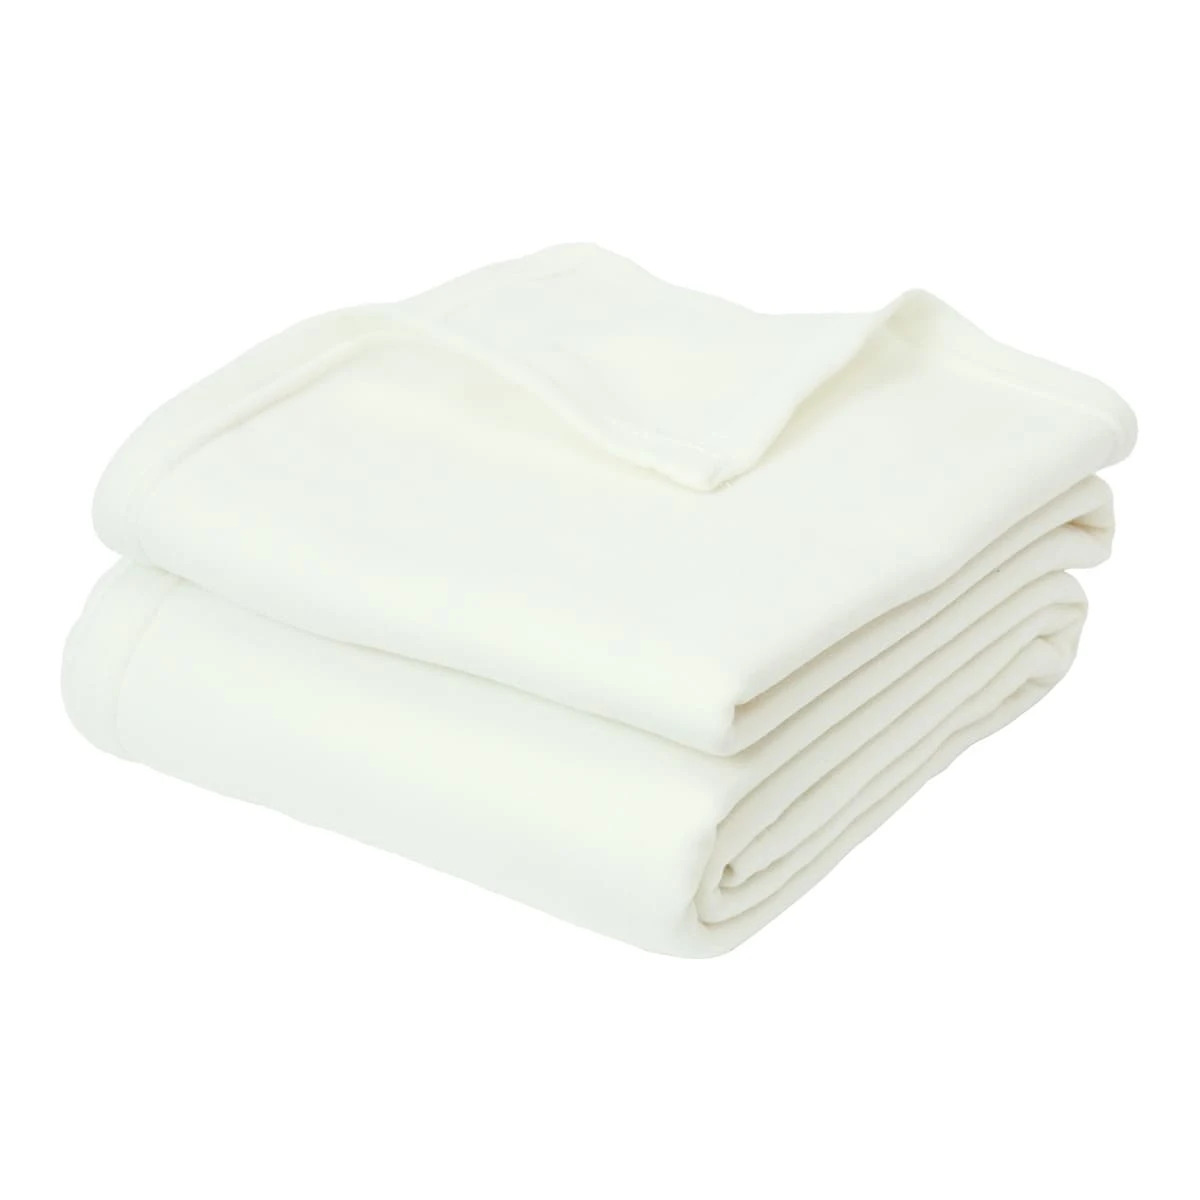 Solid Color Fleece Blanket (Cream) - Foldover Edging